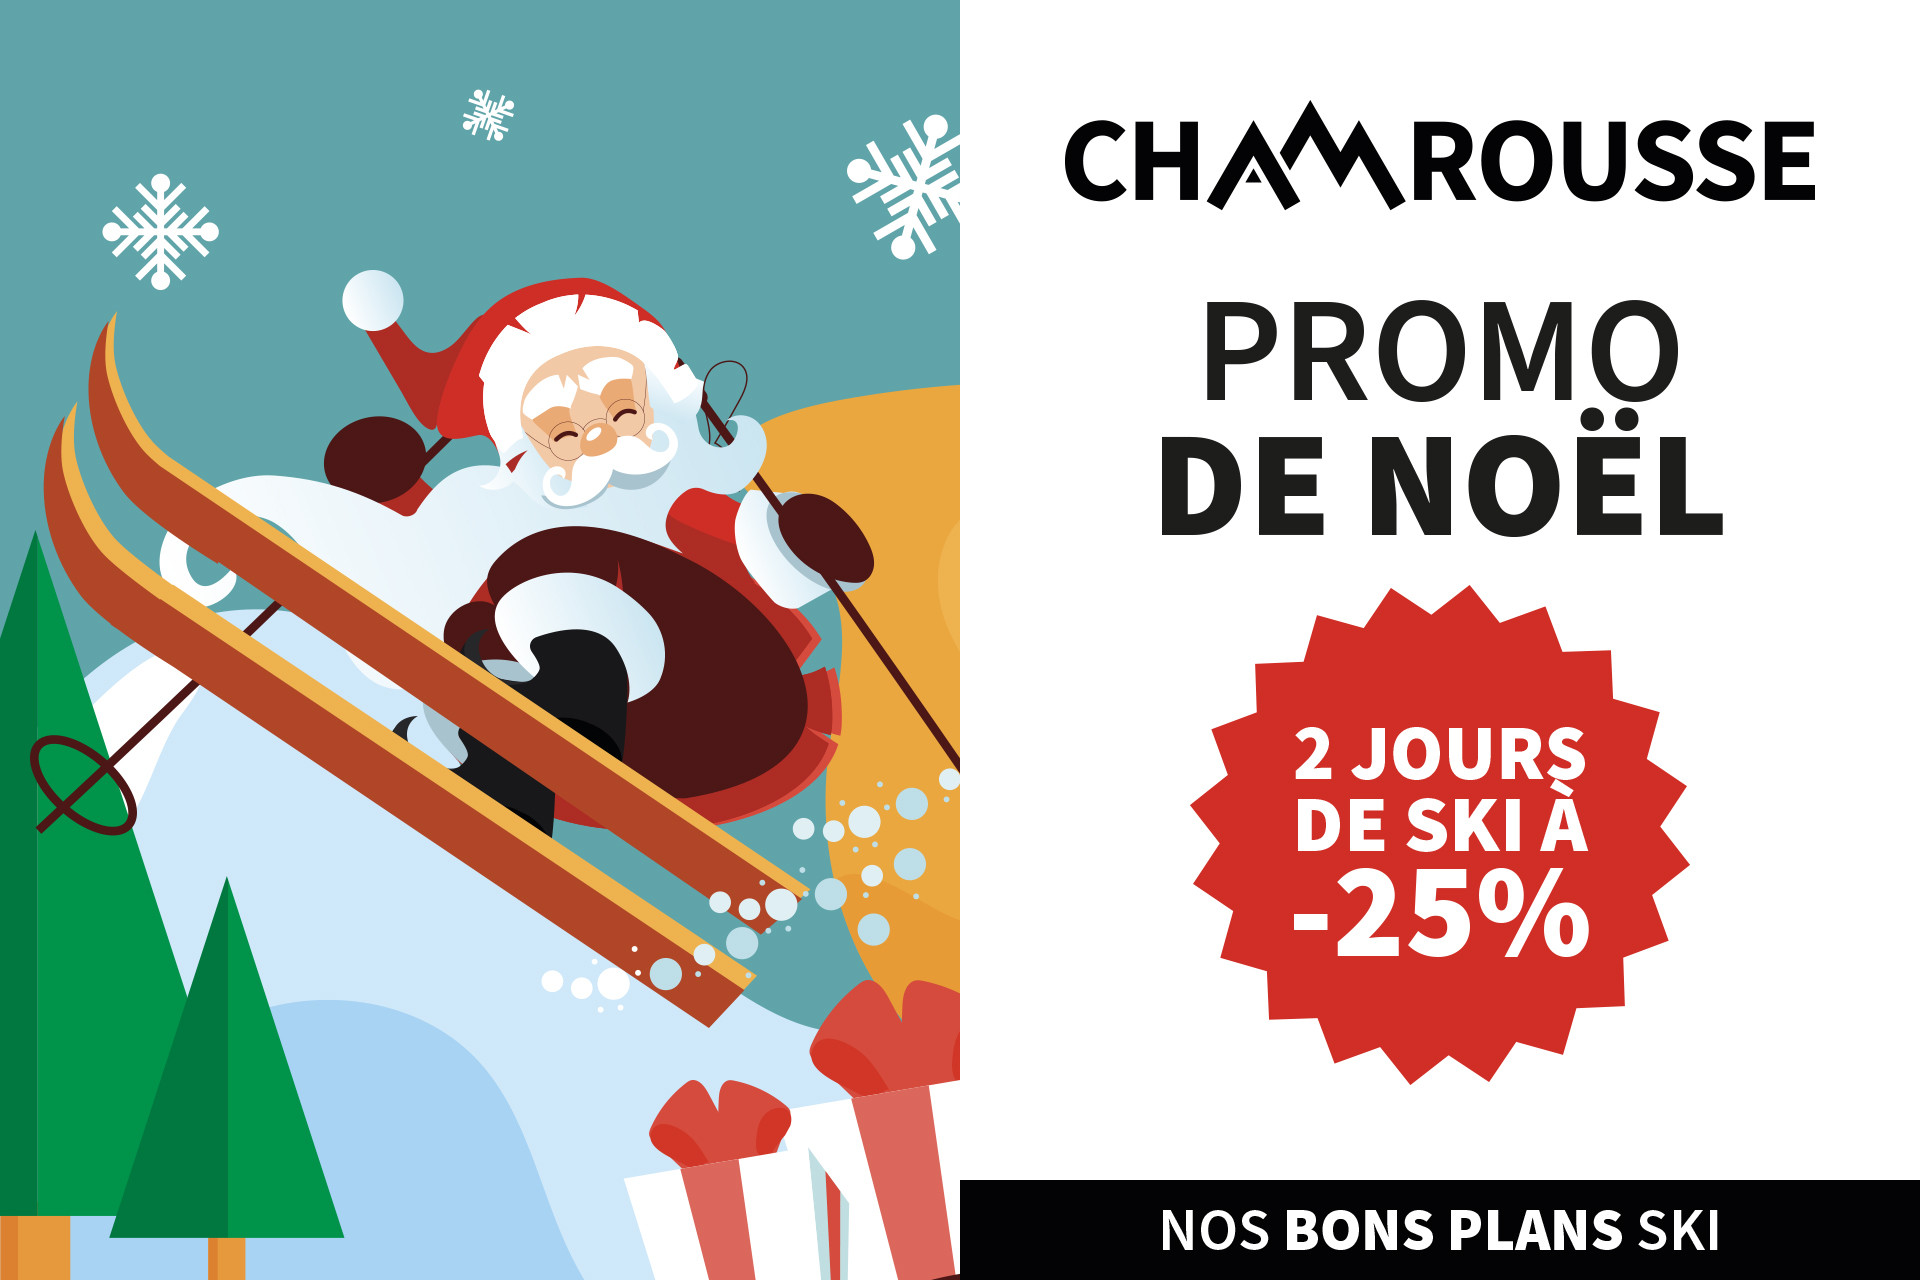 Chamrousse Christmas skipass discount mountain ski resort isere french alps france